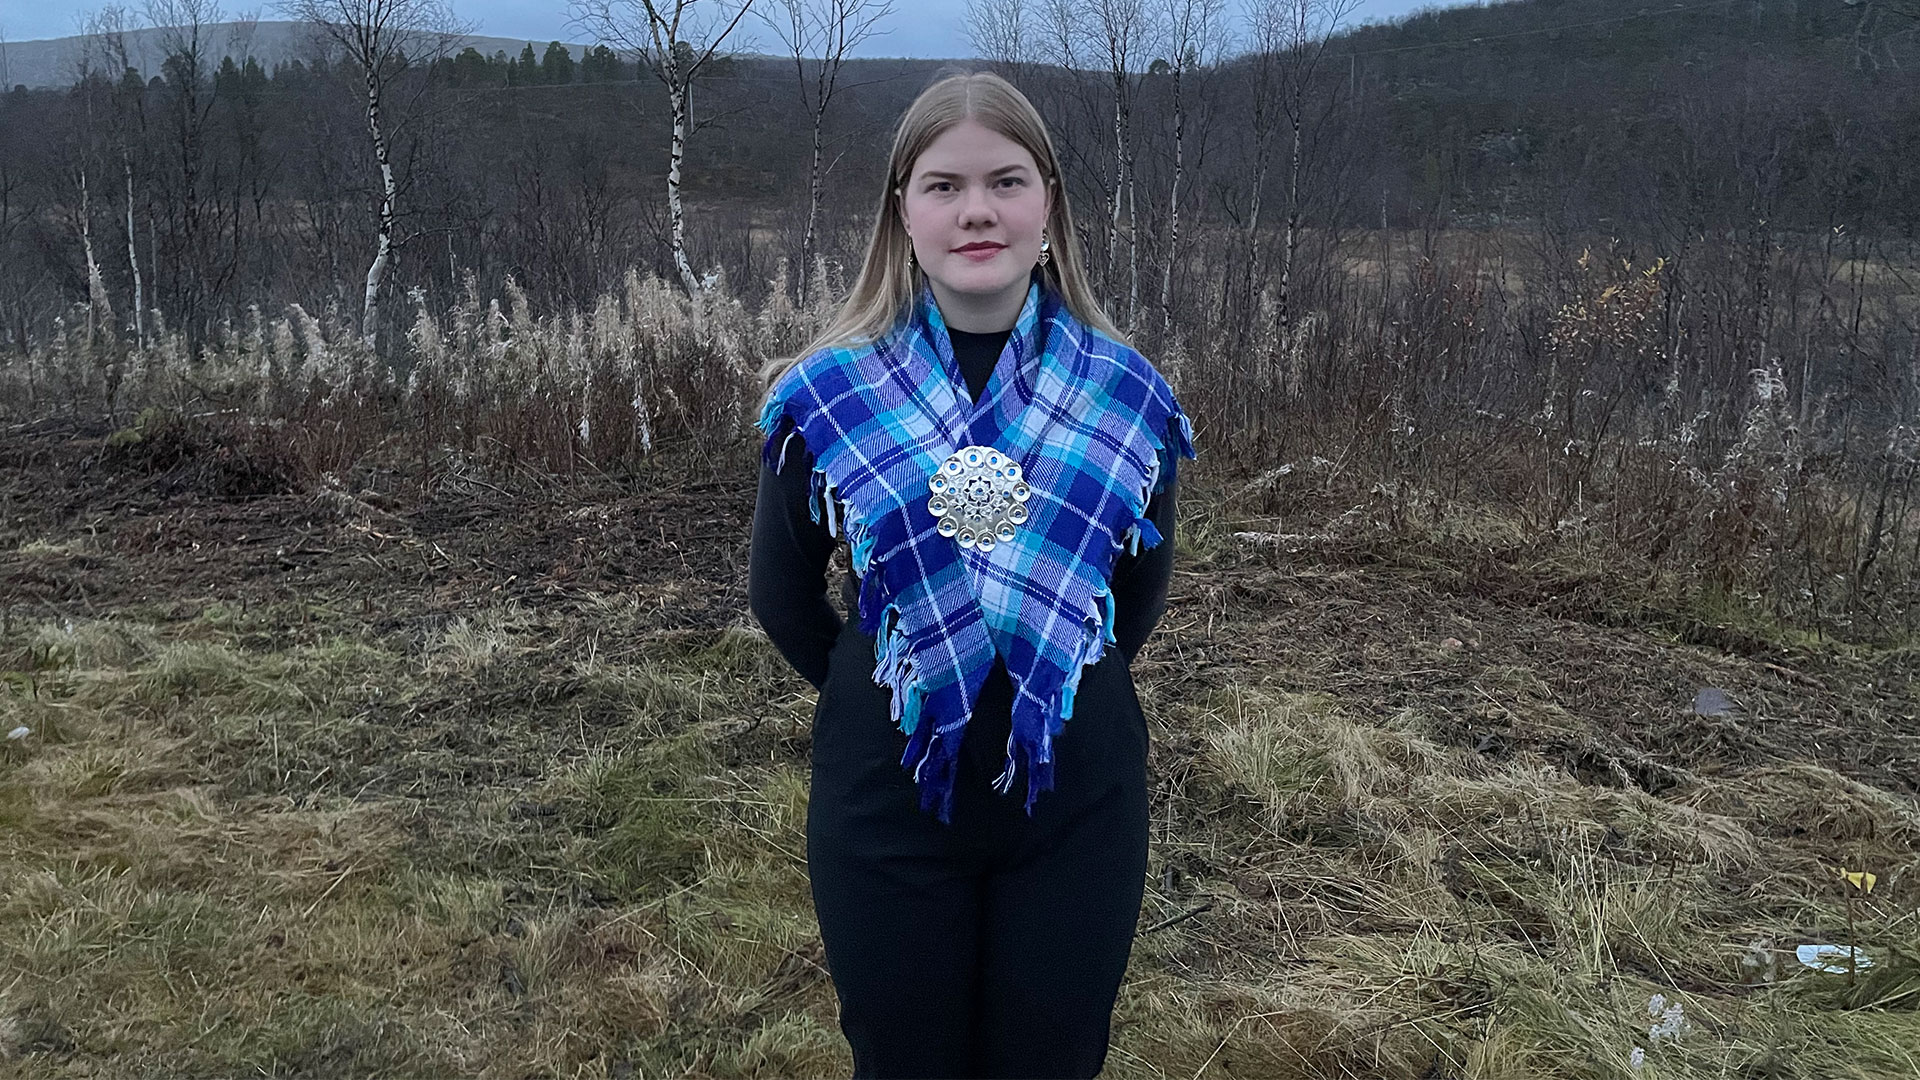 Sunna Svendsen, a Sámi youth